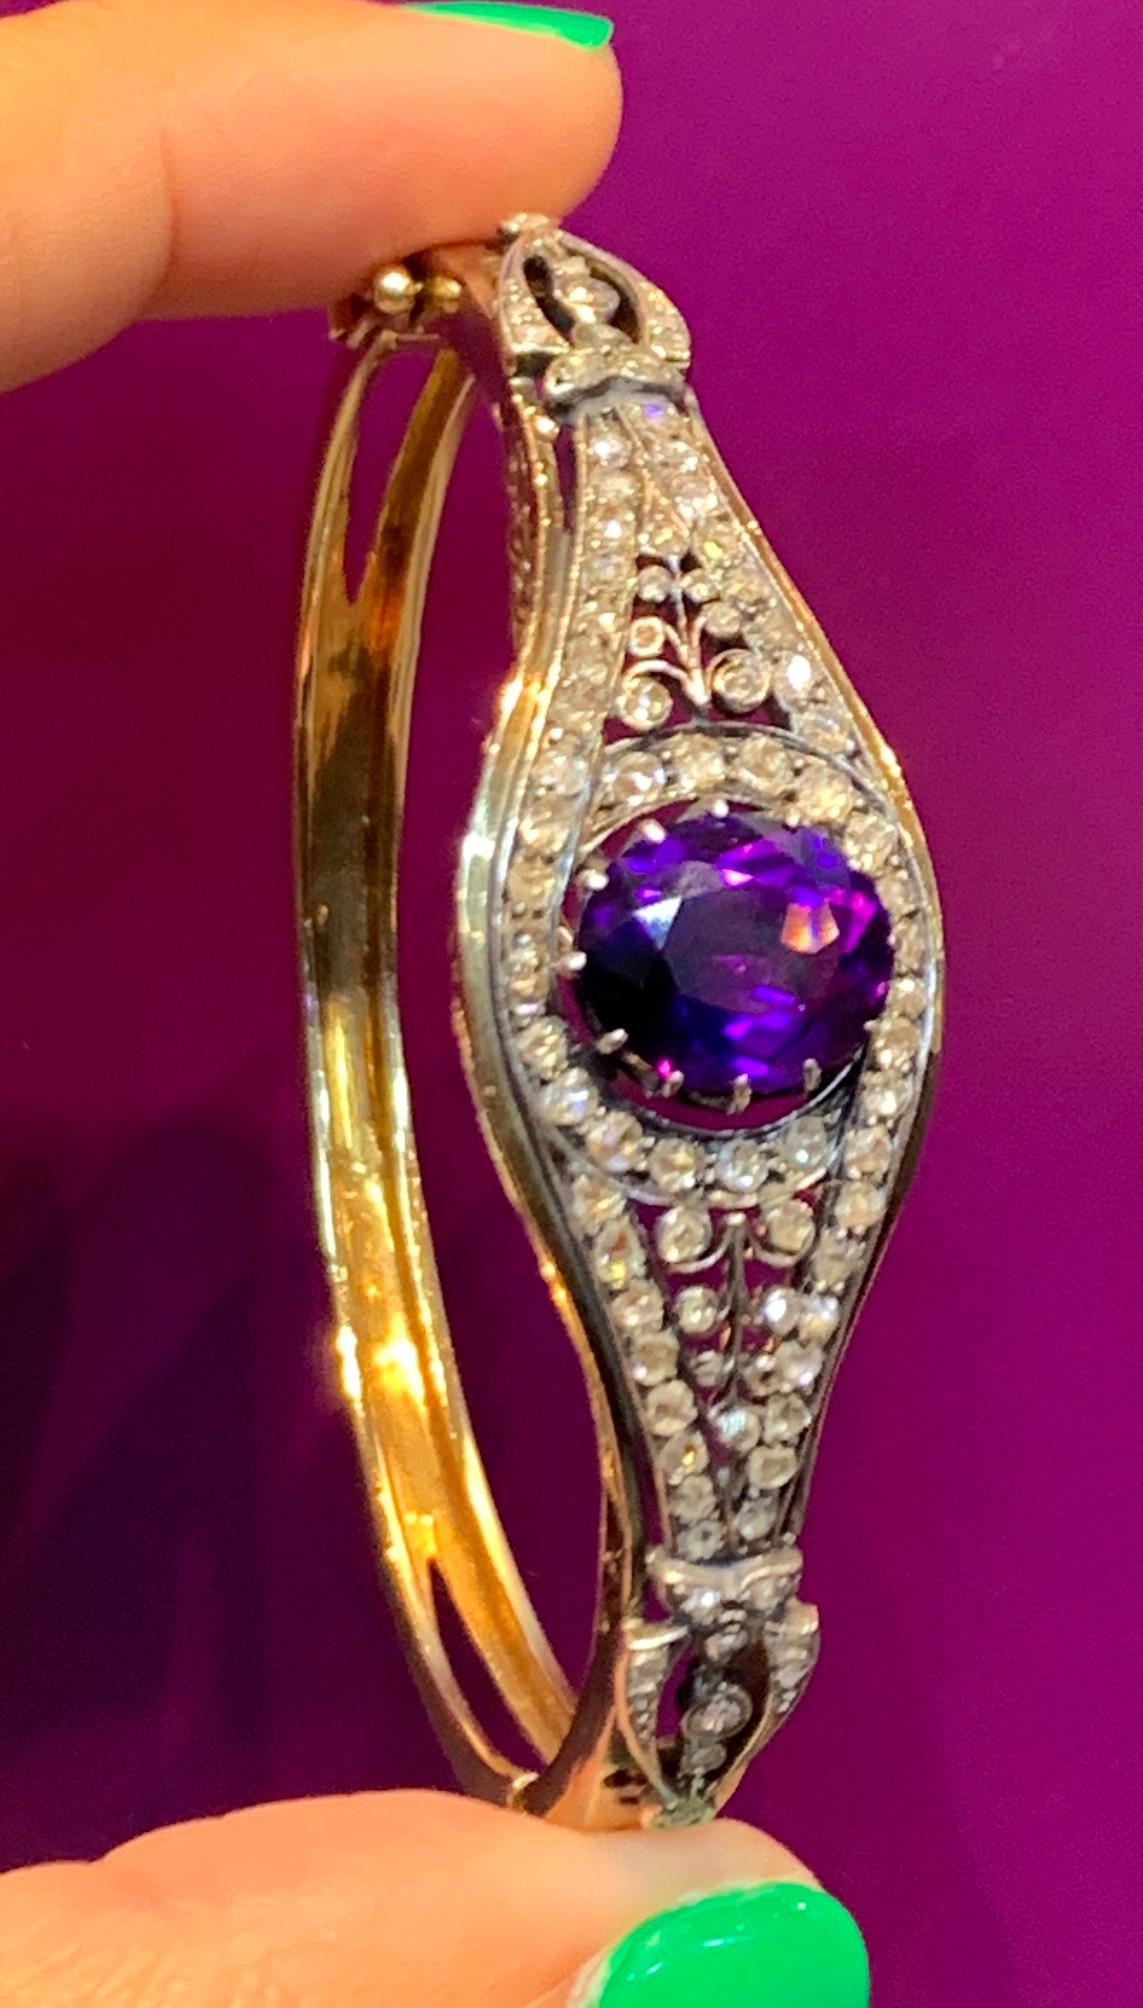 Amethyst & Rose Diamond Bangle Bracelet 14K Yellow Gold
26.9 Grams 
85 diamonds total 
2.5